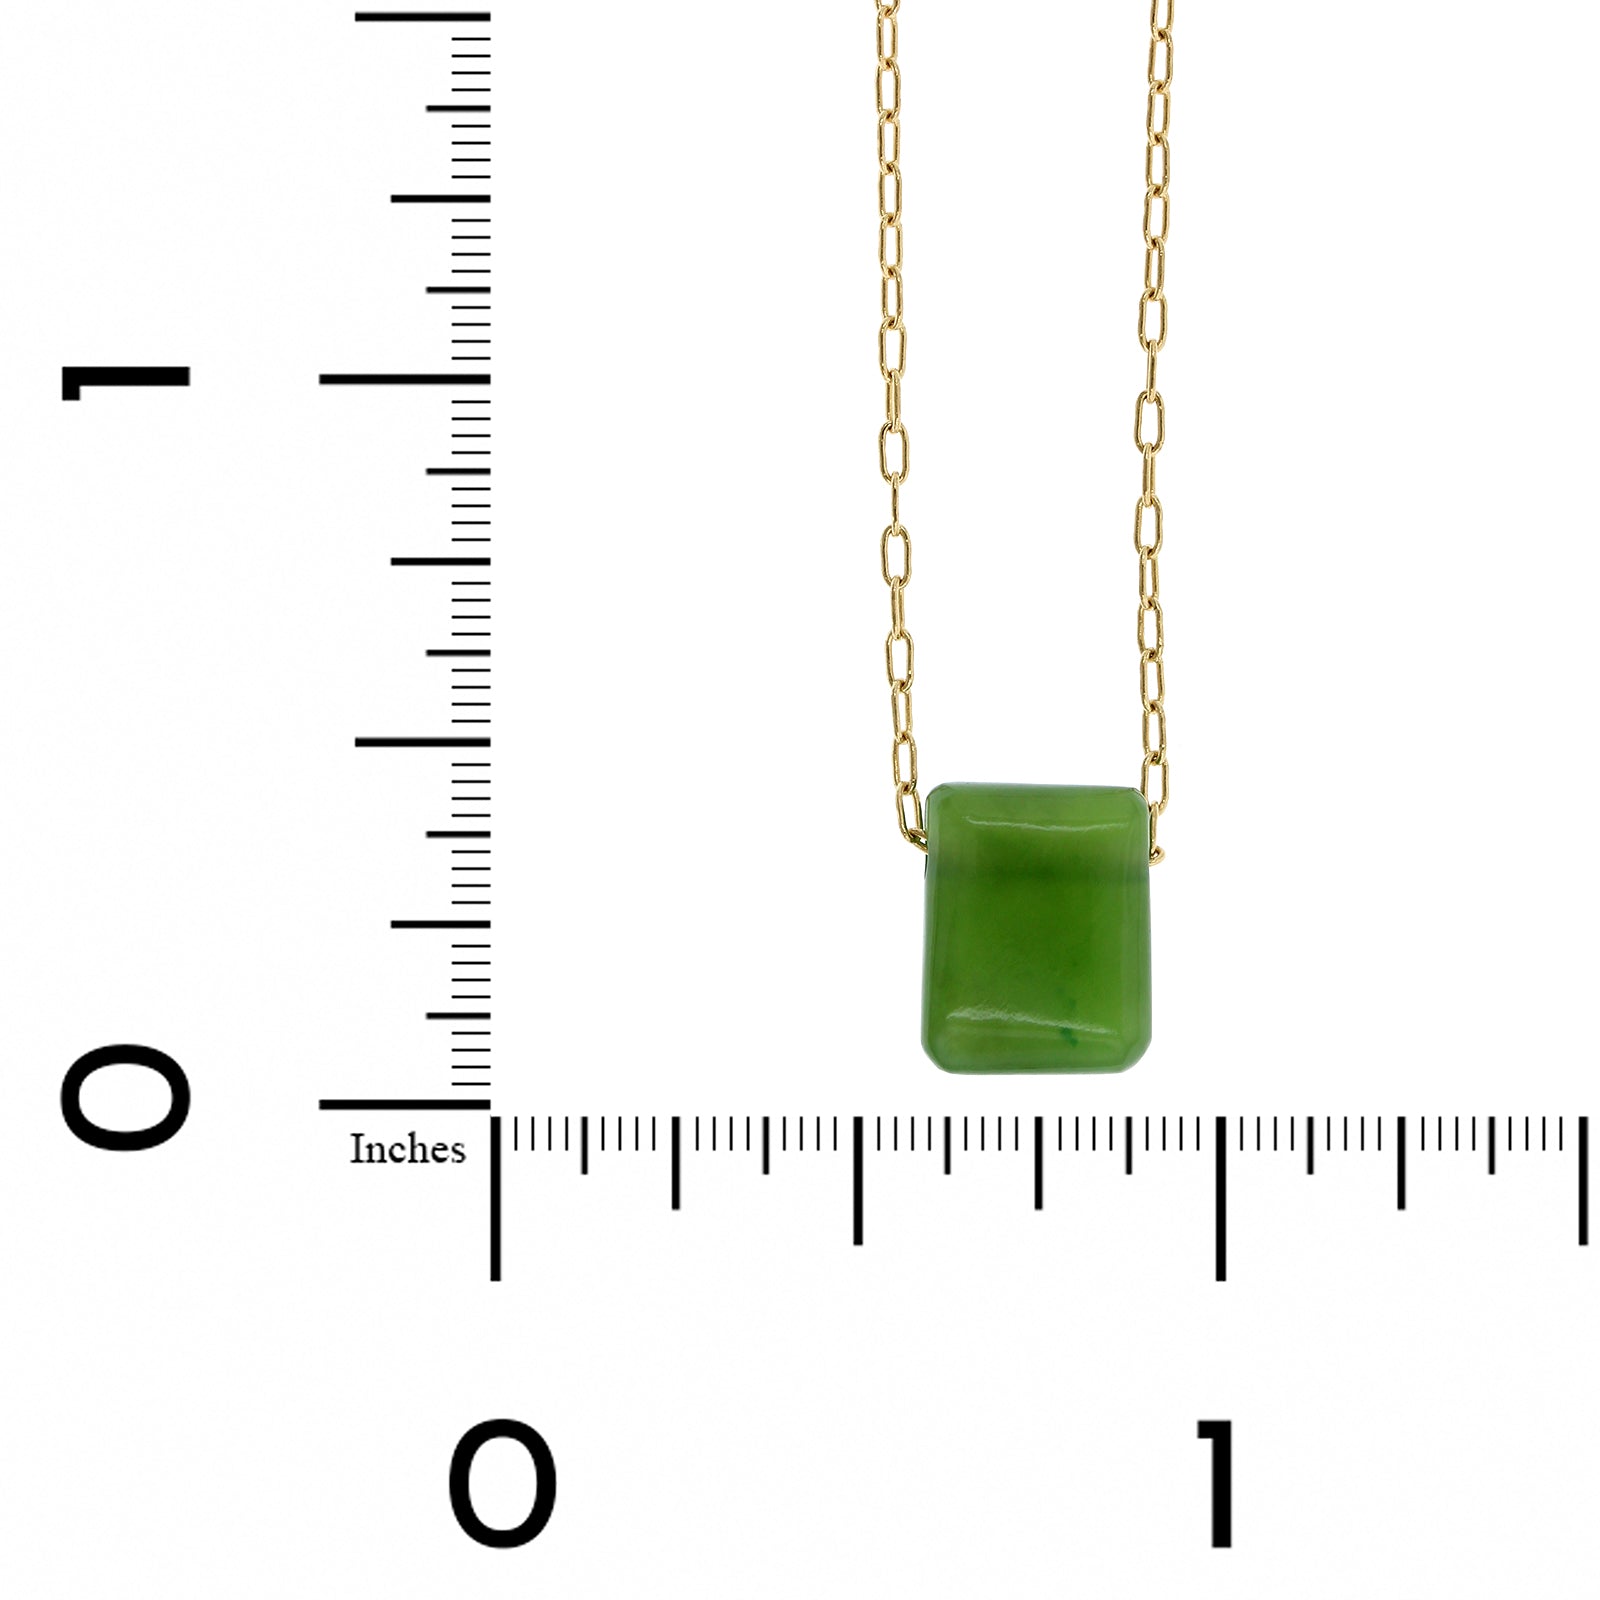 18K Yellow Gold Jade Choker Necklace